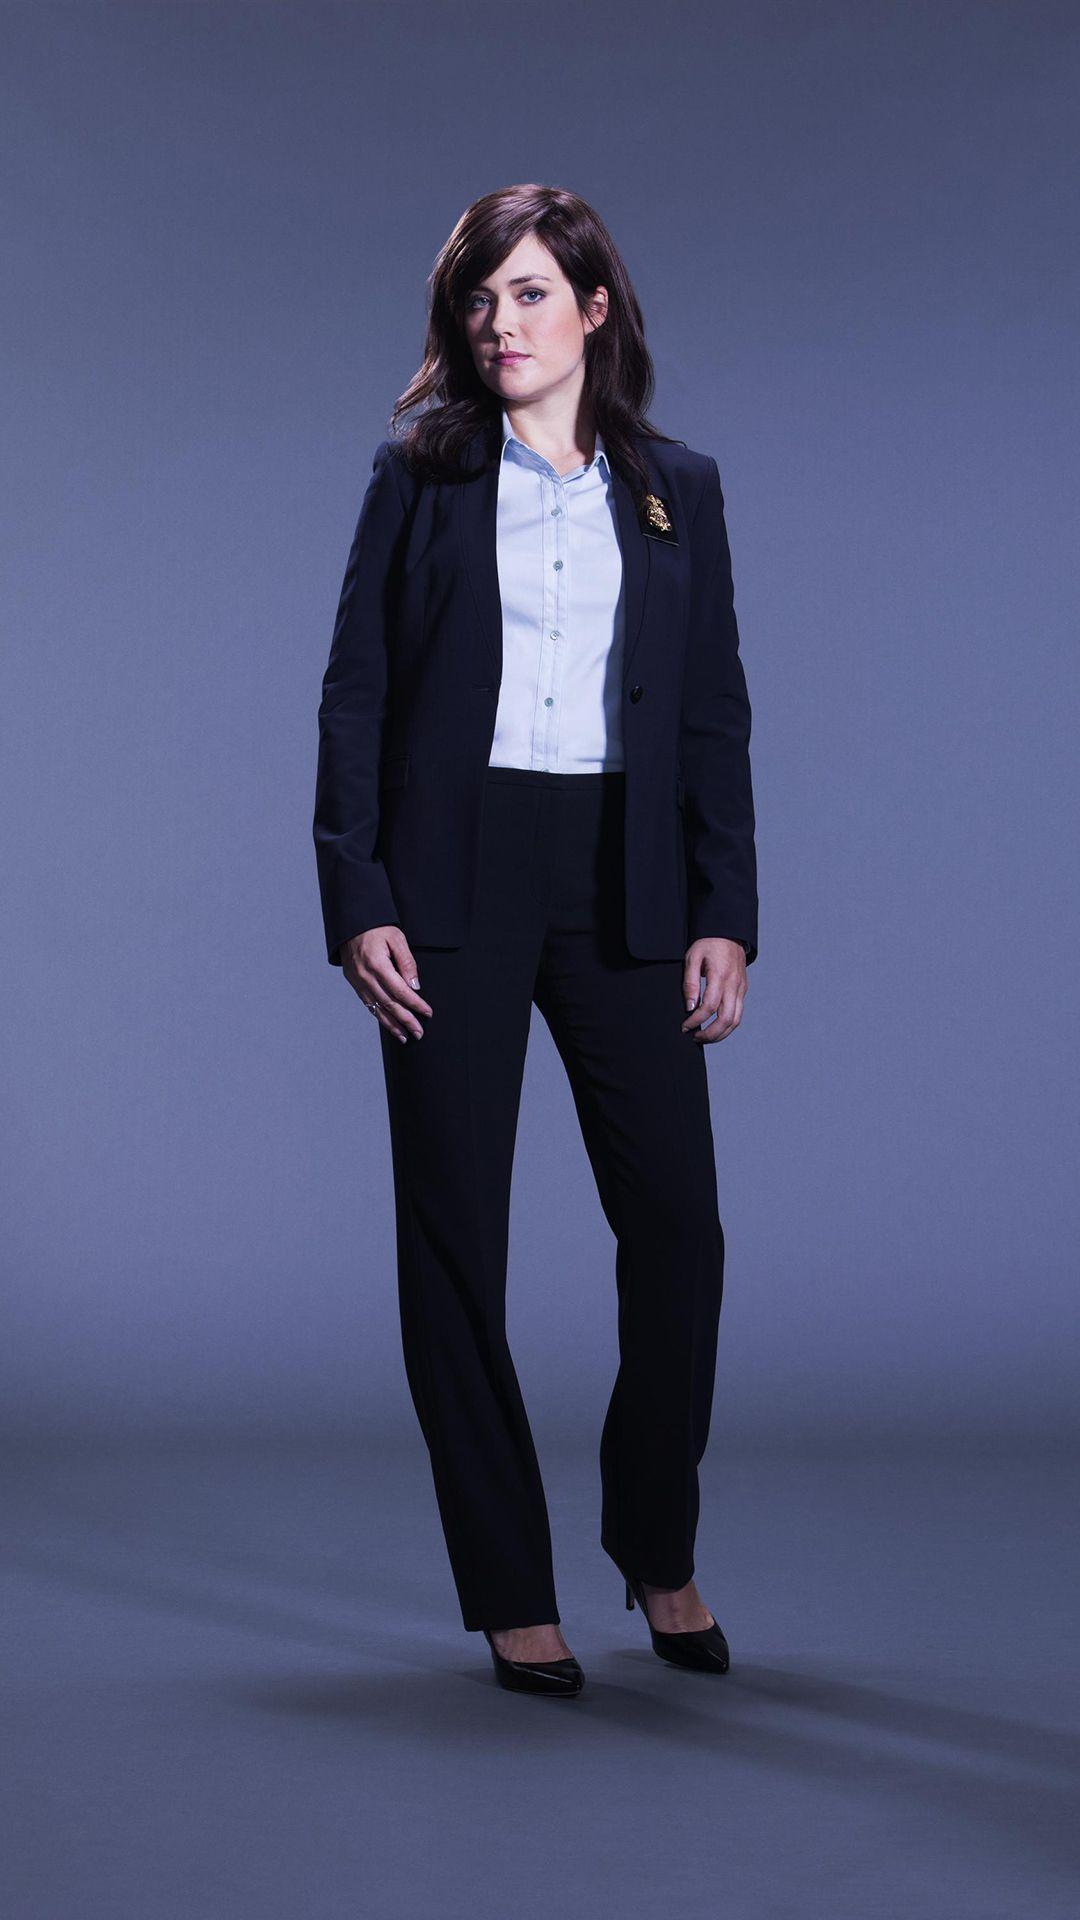 Megan Boone as Elizabeth Keen in The Blacklist Mobile Wallpaper 25467